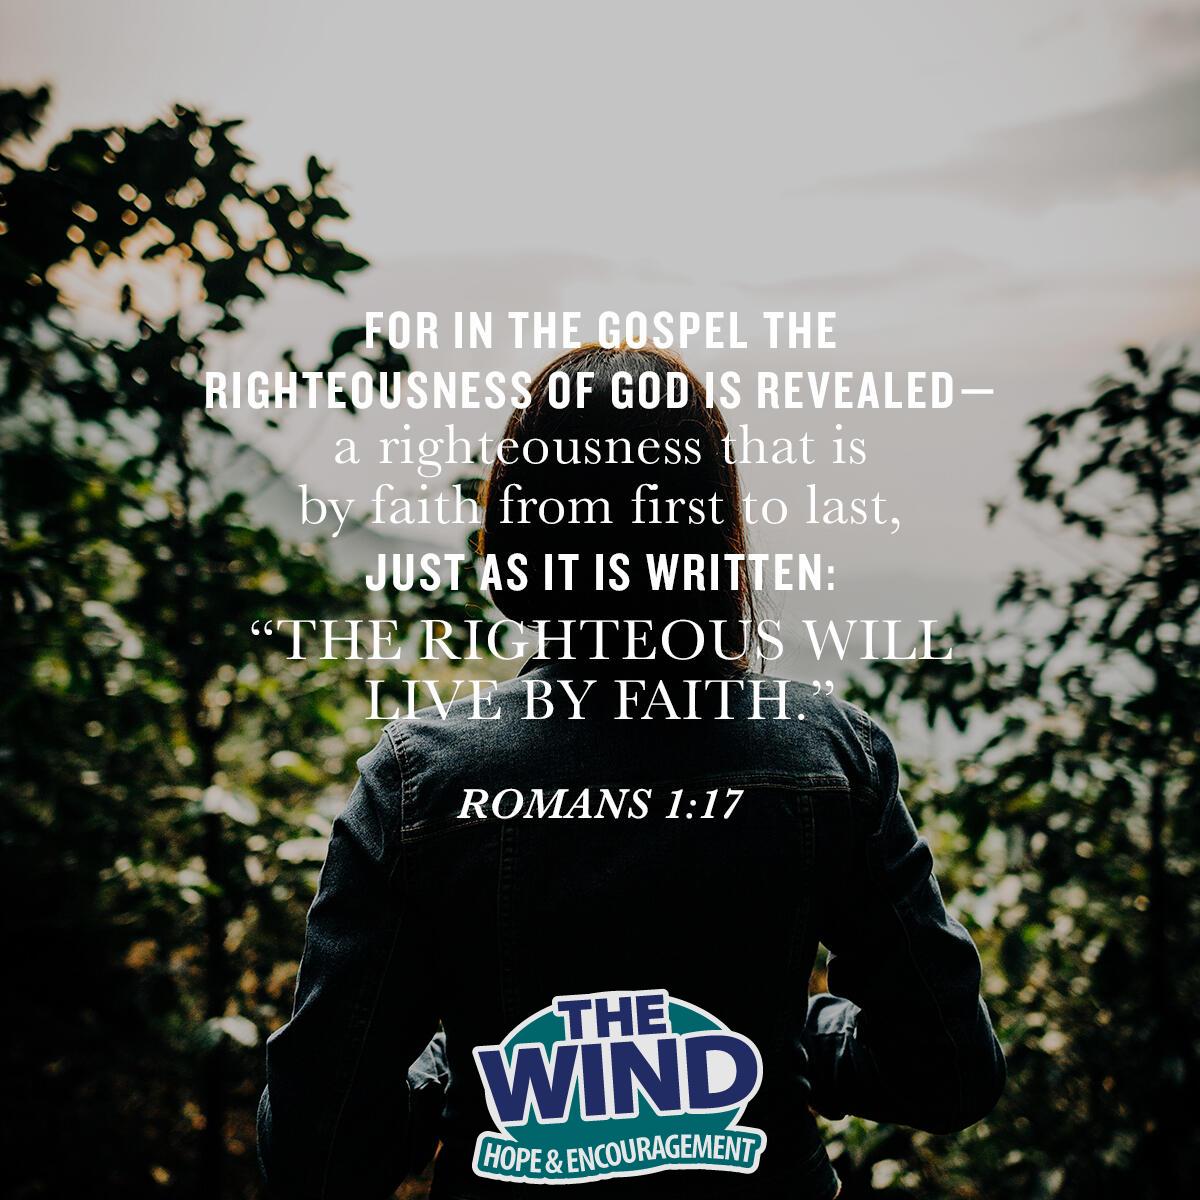 Romans 1:17